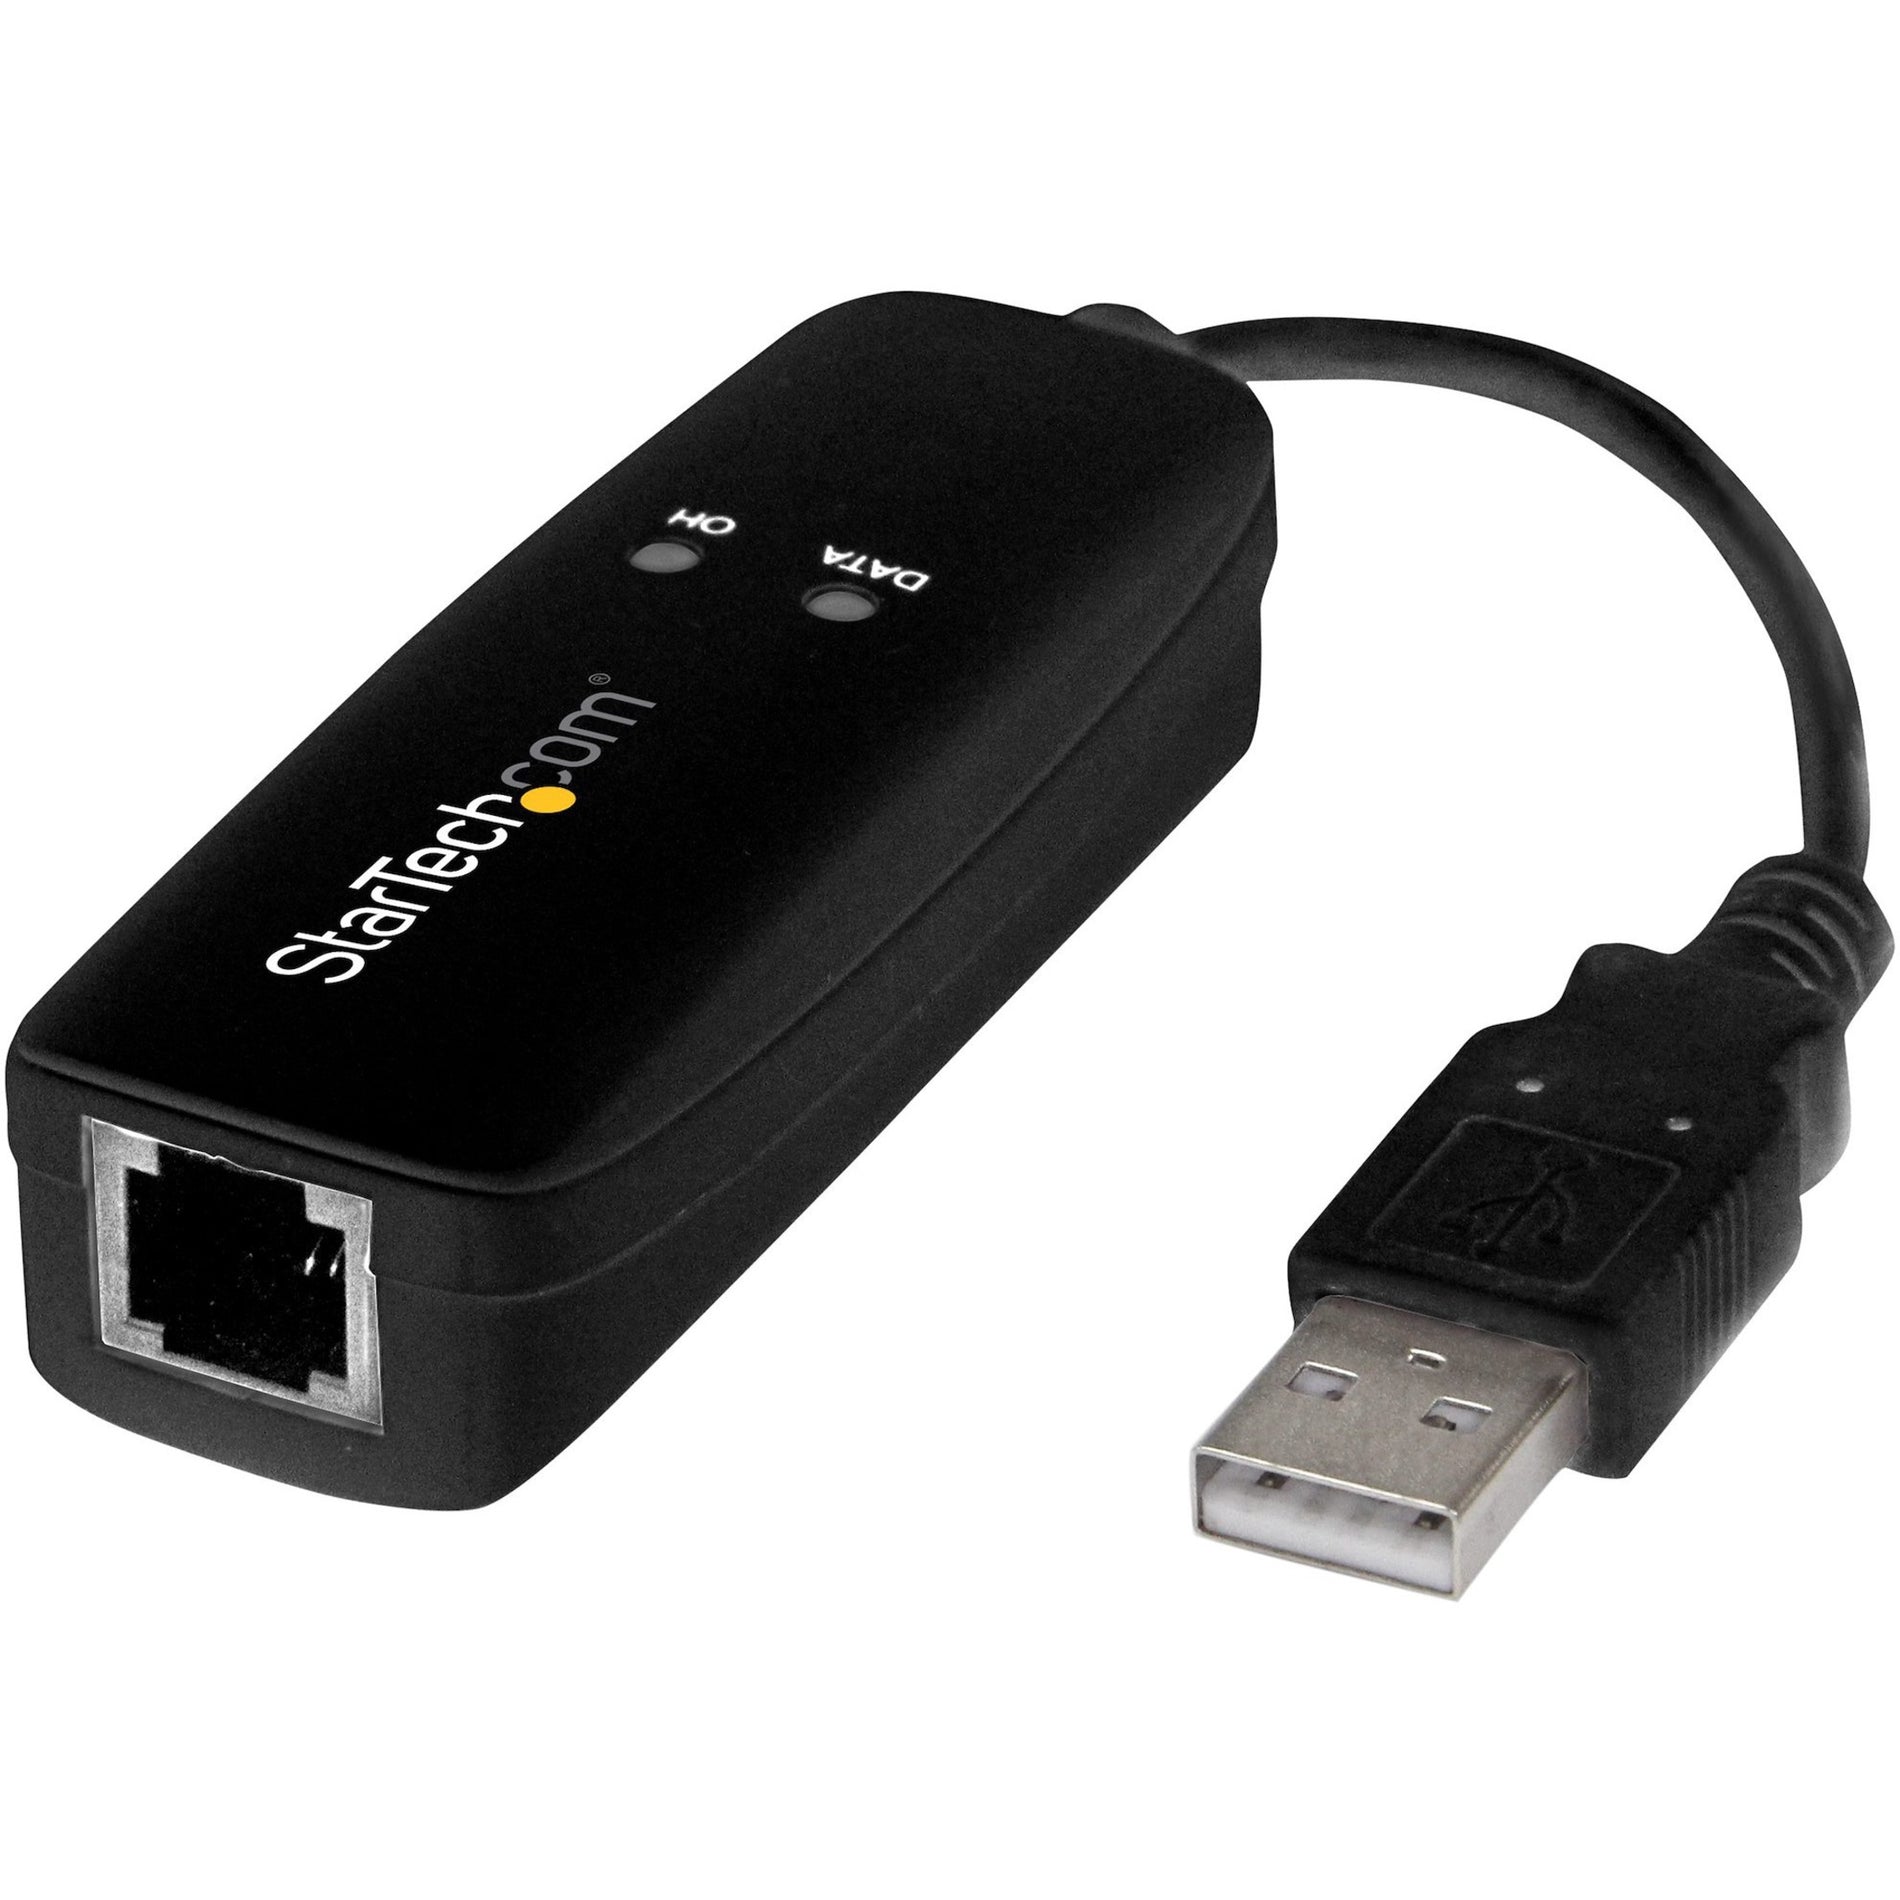 StarTech.com USB56KEMH2 56K USB Dial-Up and Fax Modem - V.92 - External, 2 Year Warranty, RoHS, REACH, WEEE